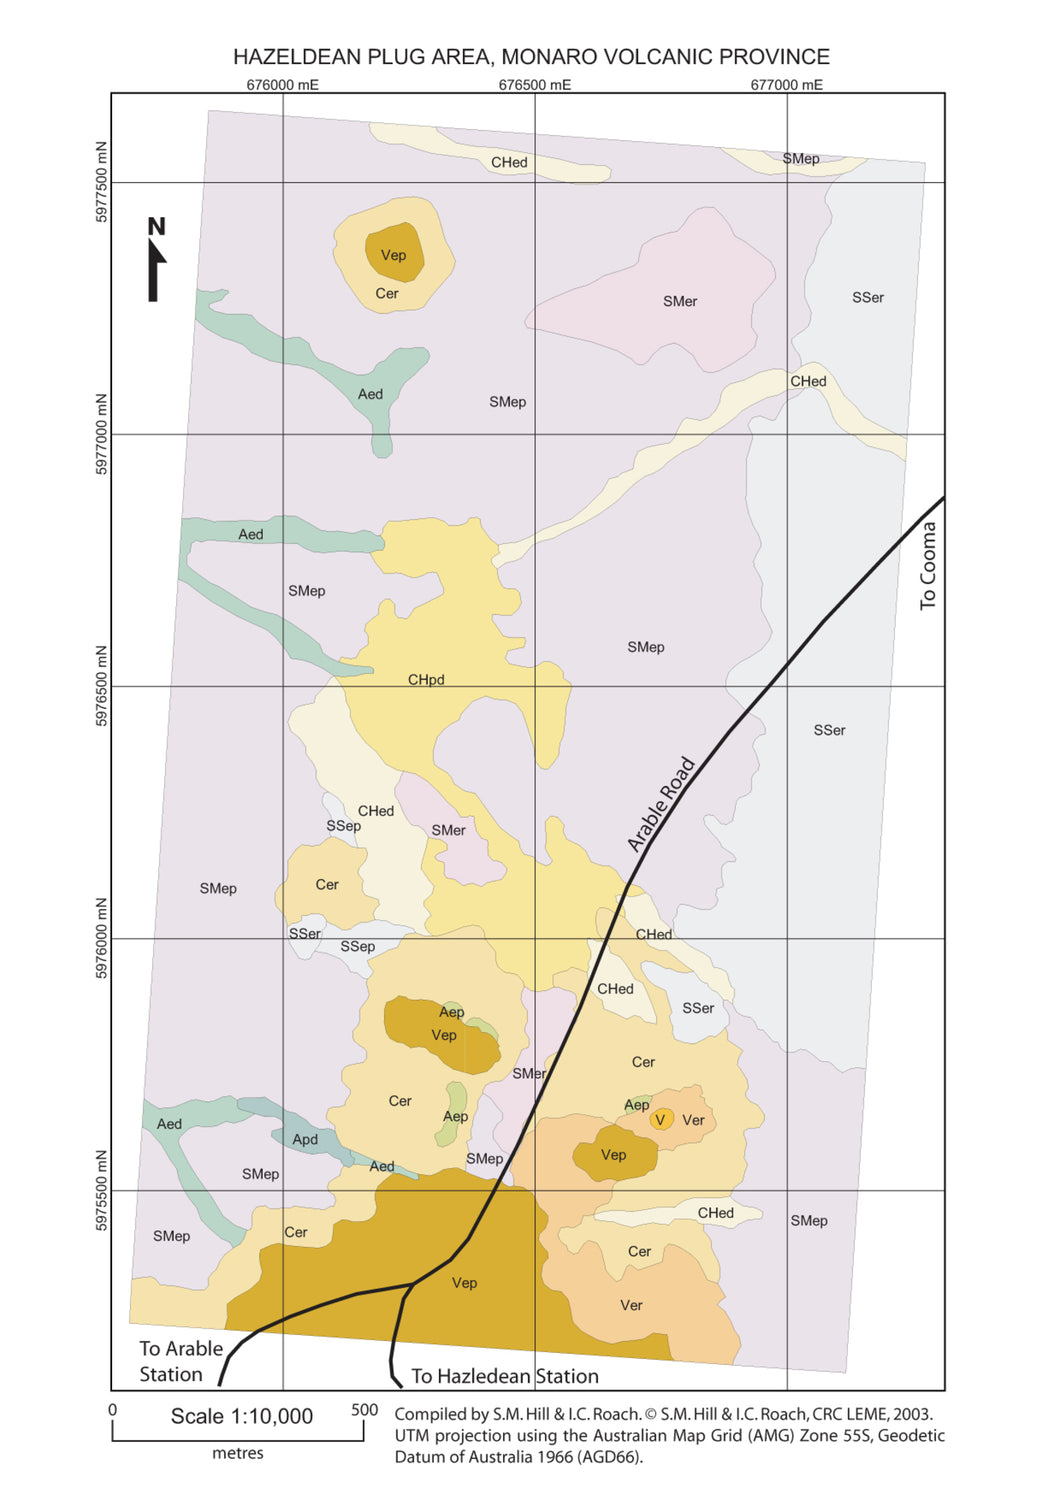 Image of Hazeldean Plug Area, Monaro Volcanic Province 1:10000 Regolith Landform map